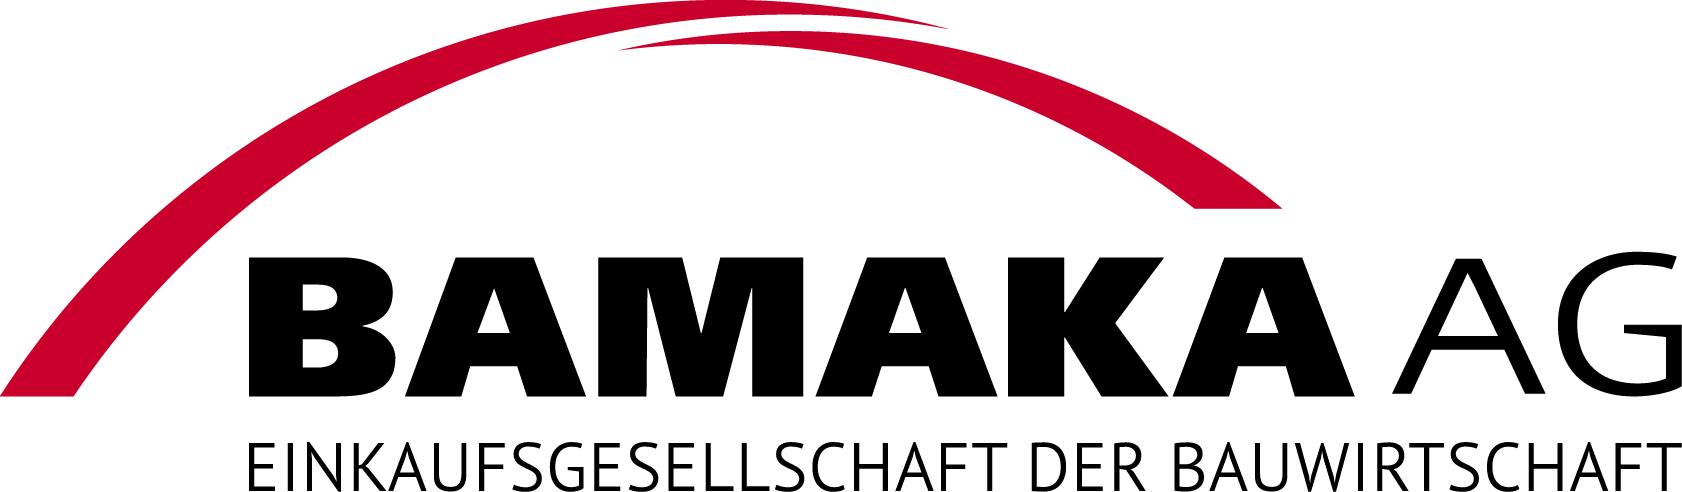 BAMAKA Logo 2020 4c